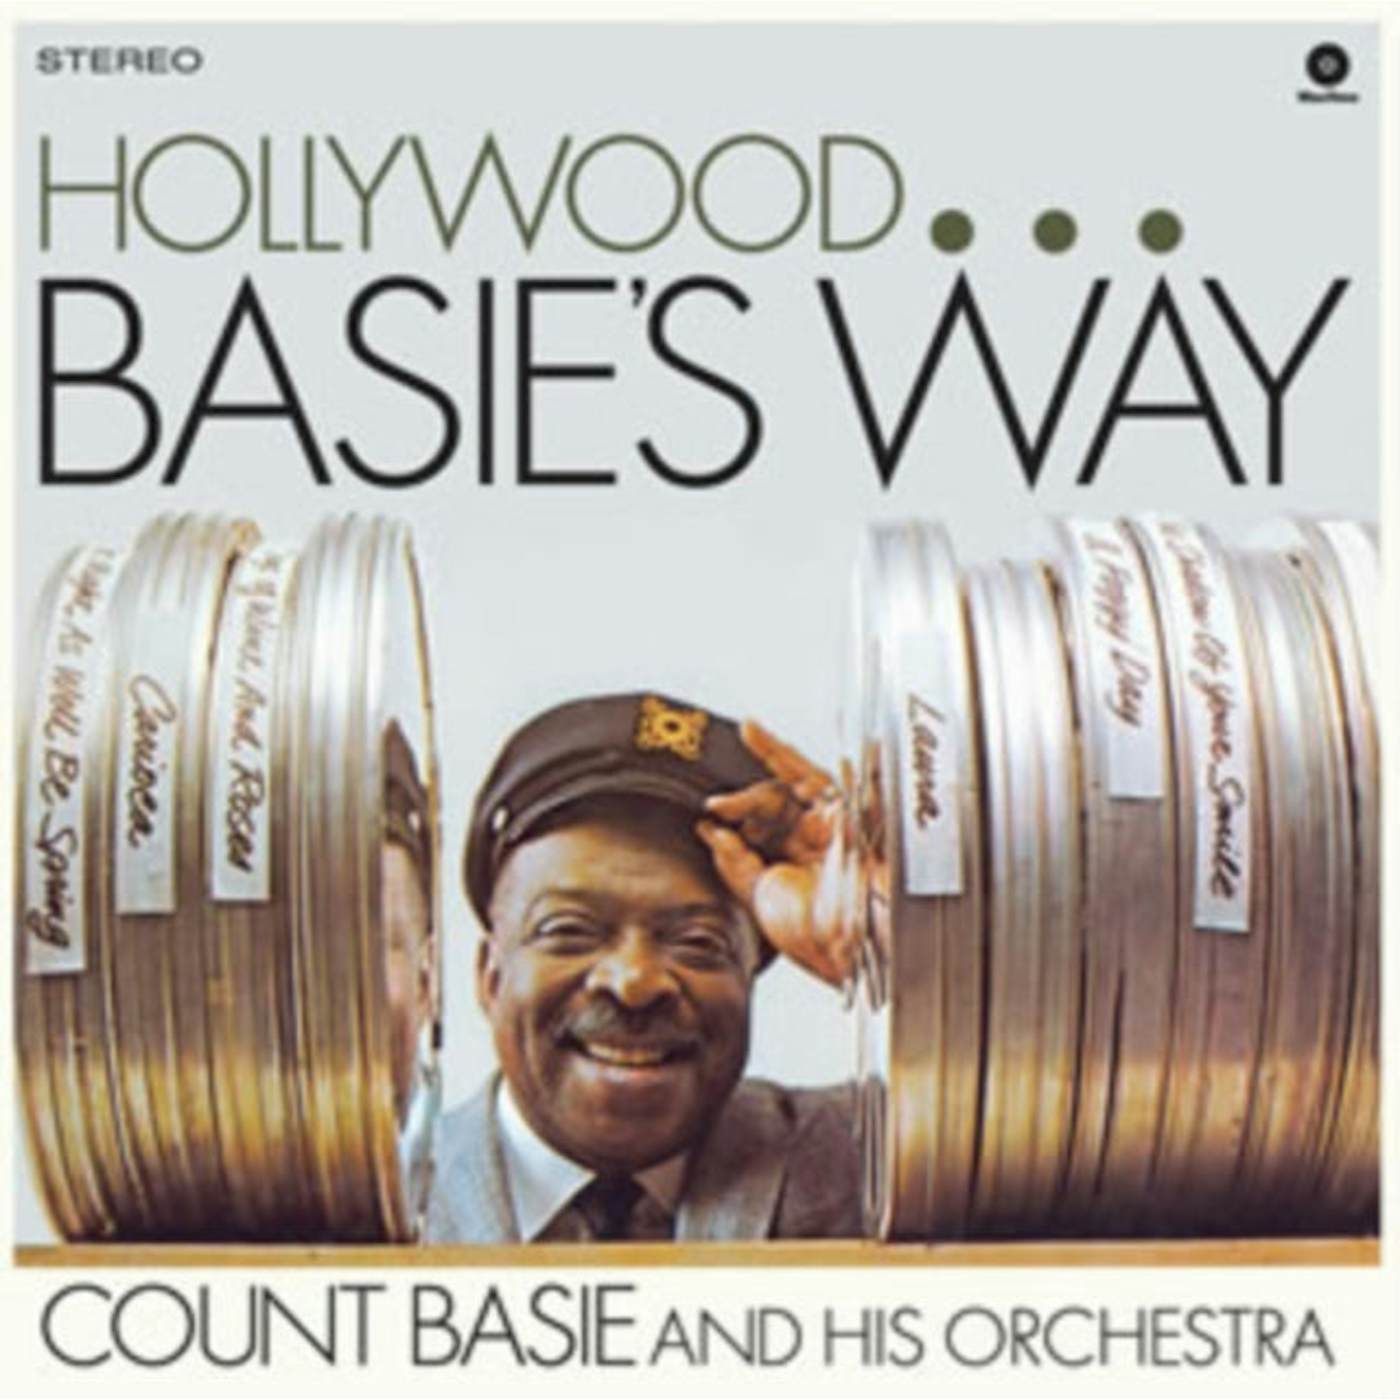 Count Basie LP Vinyl Record - Hollywood... Basie's Way